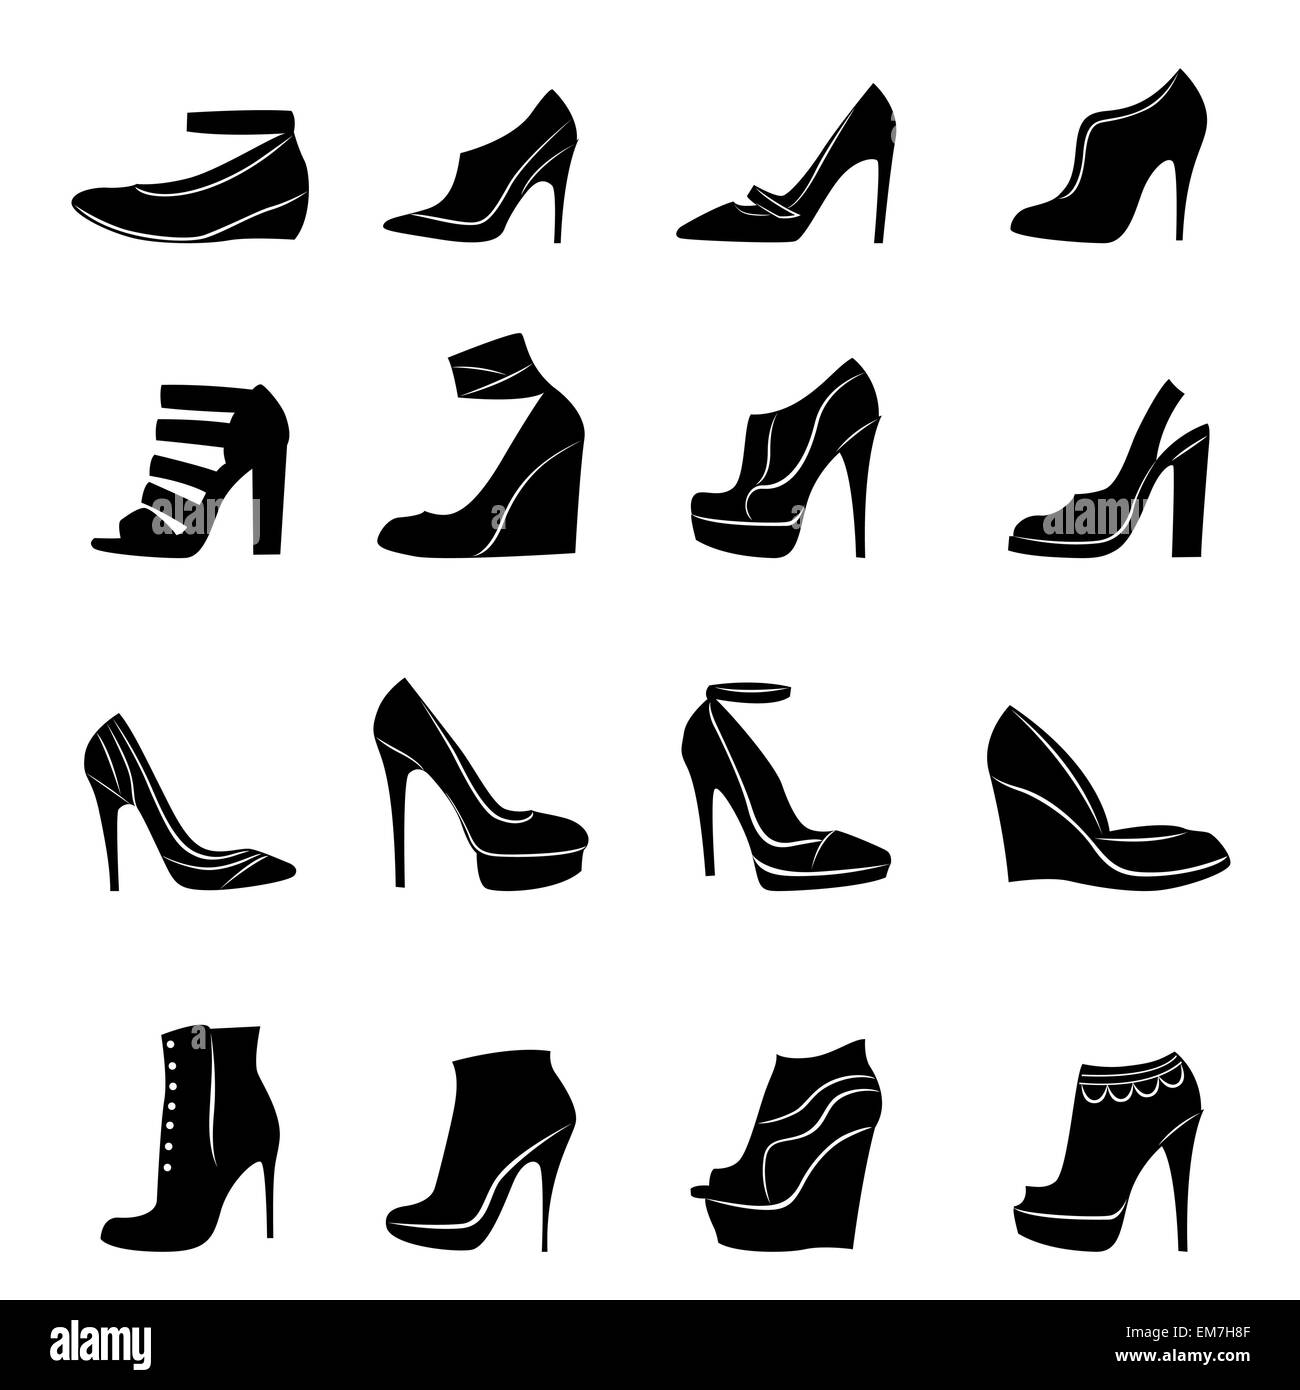 89 Black High Heel Clipart Clip Art High Heel Clipart Images, Stock Photos,  3D objects, & Vectors